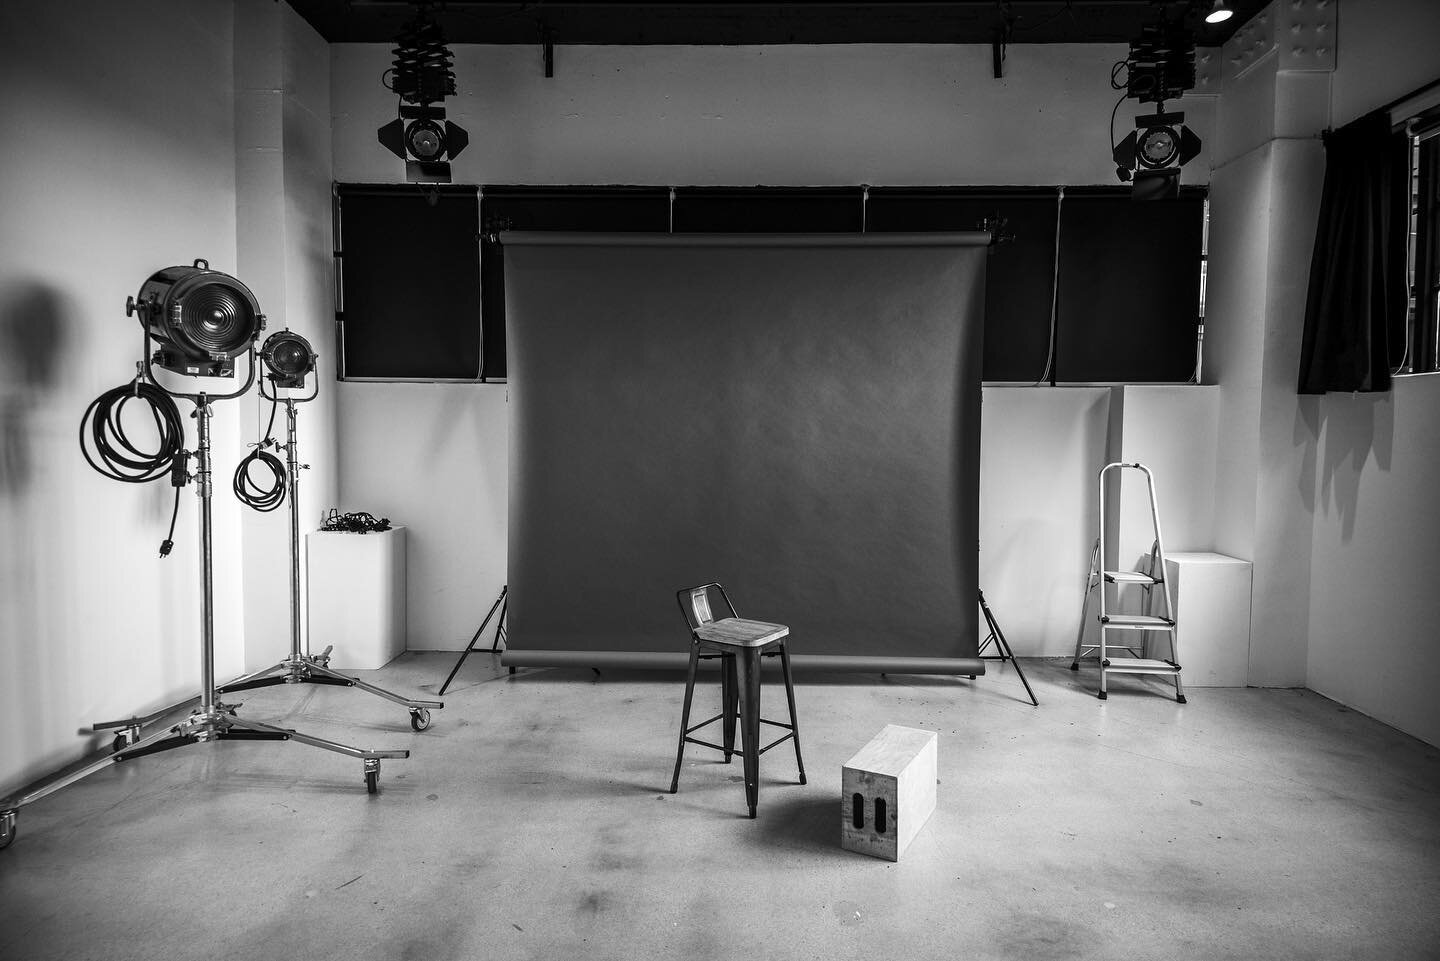 The simple set letting in daylight. 
#daylight #photography #photo #studio #studiophotography #studiophotoshoot #studiorental #letsmakeroomforphotography #photoroomrentals